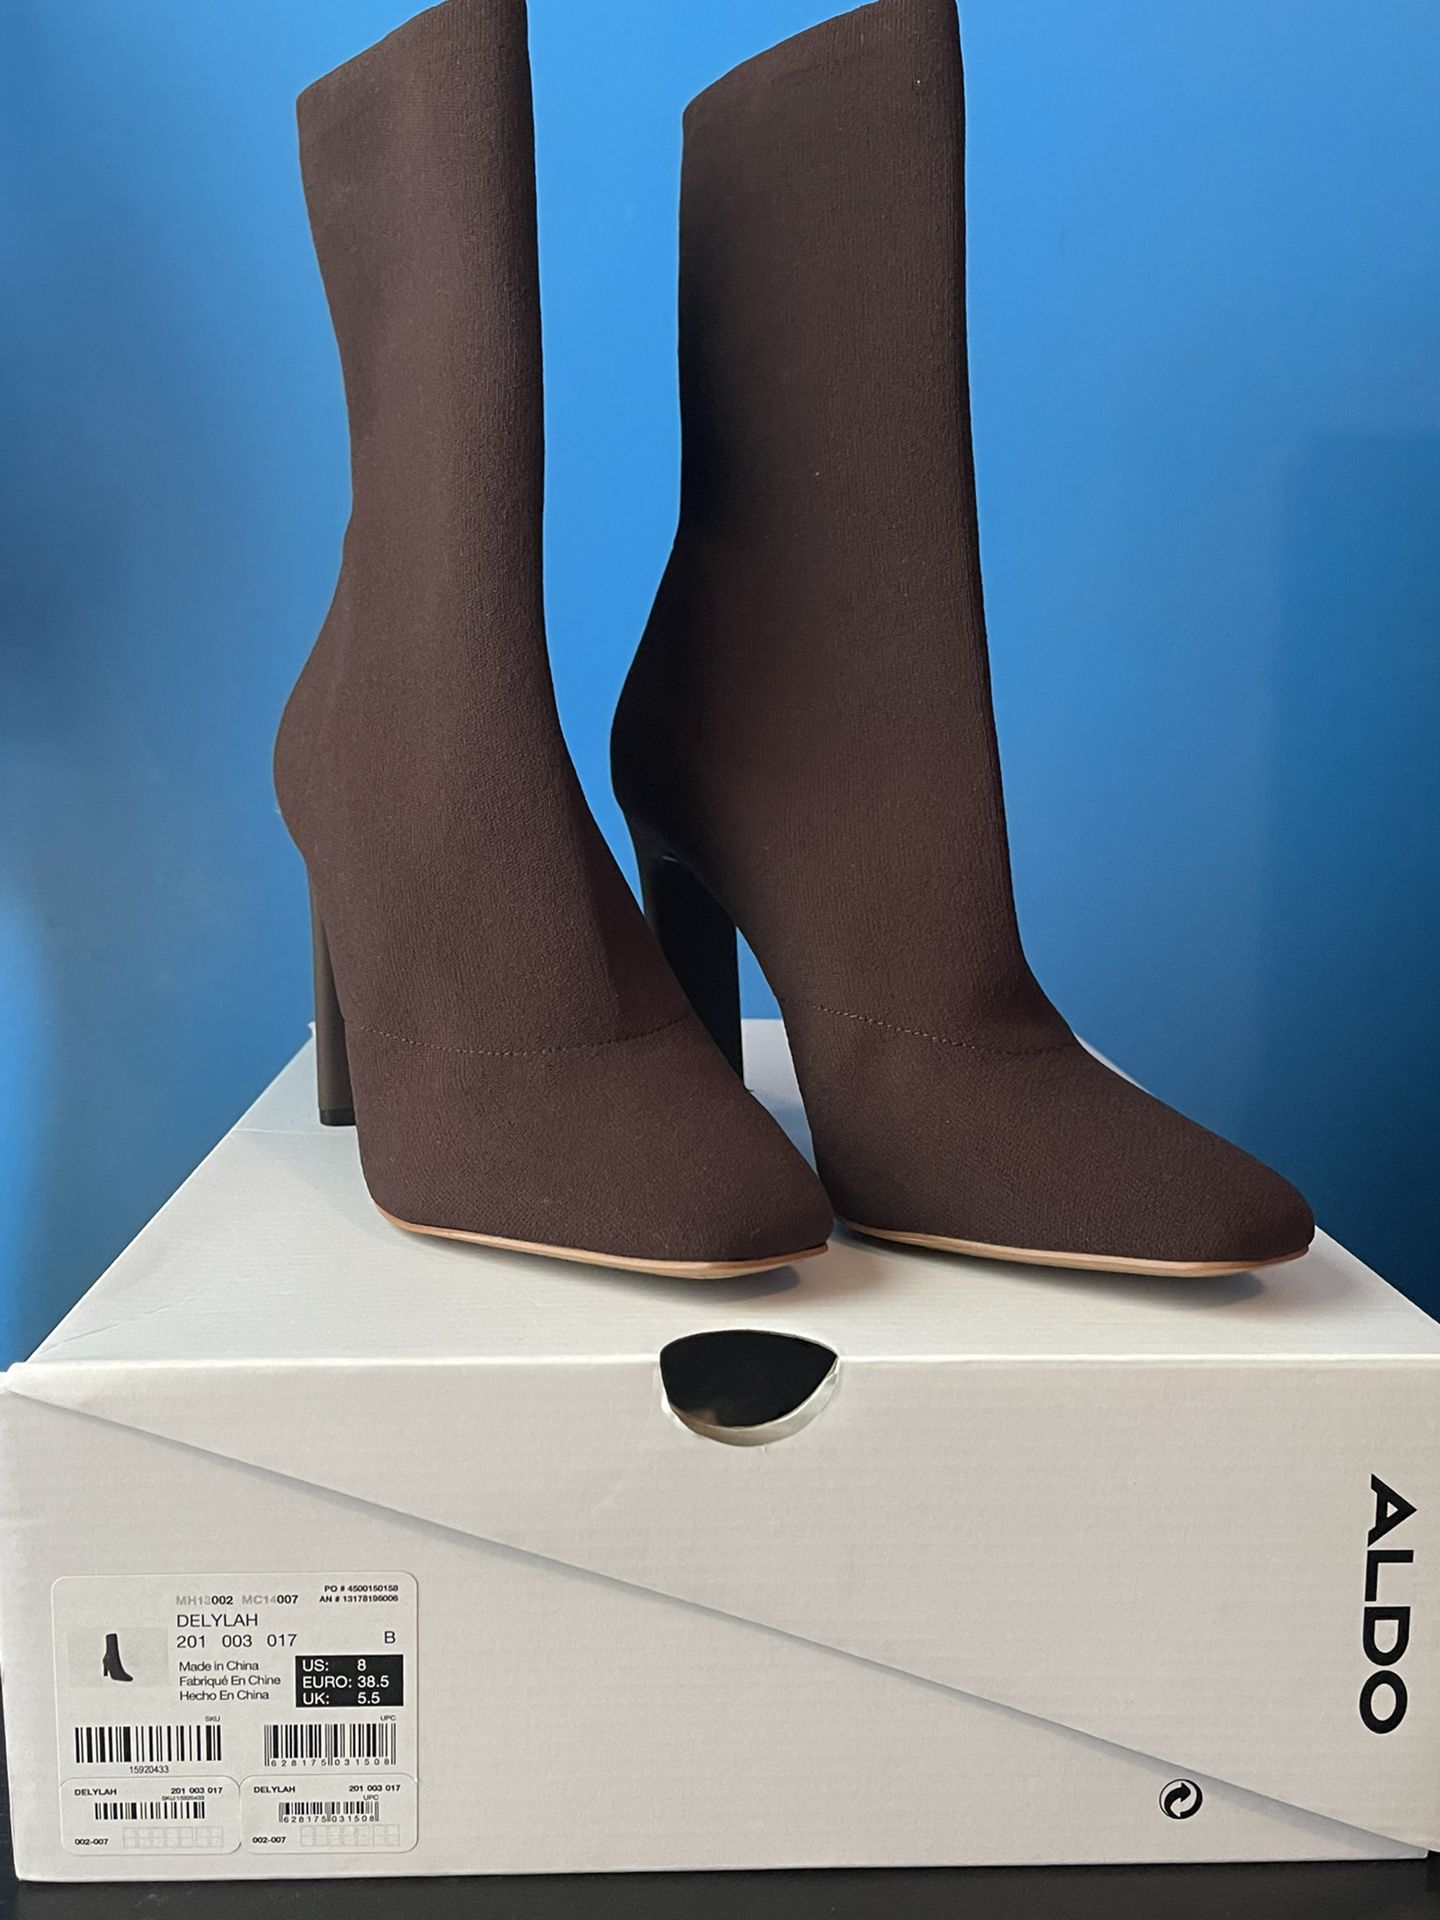 Aldo Women’s Brown boots Size 8